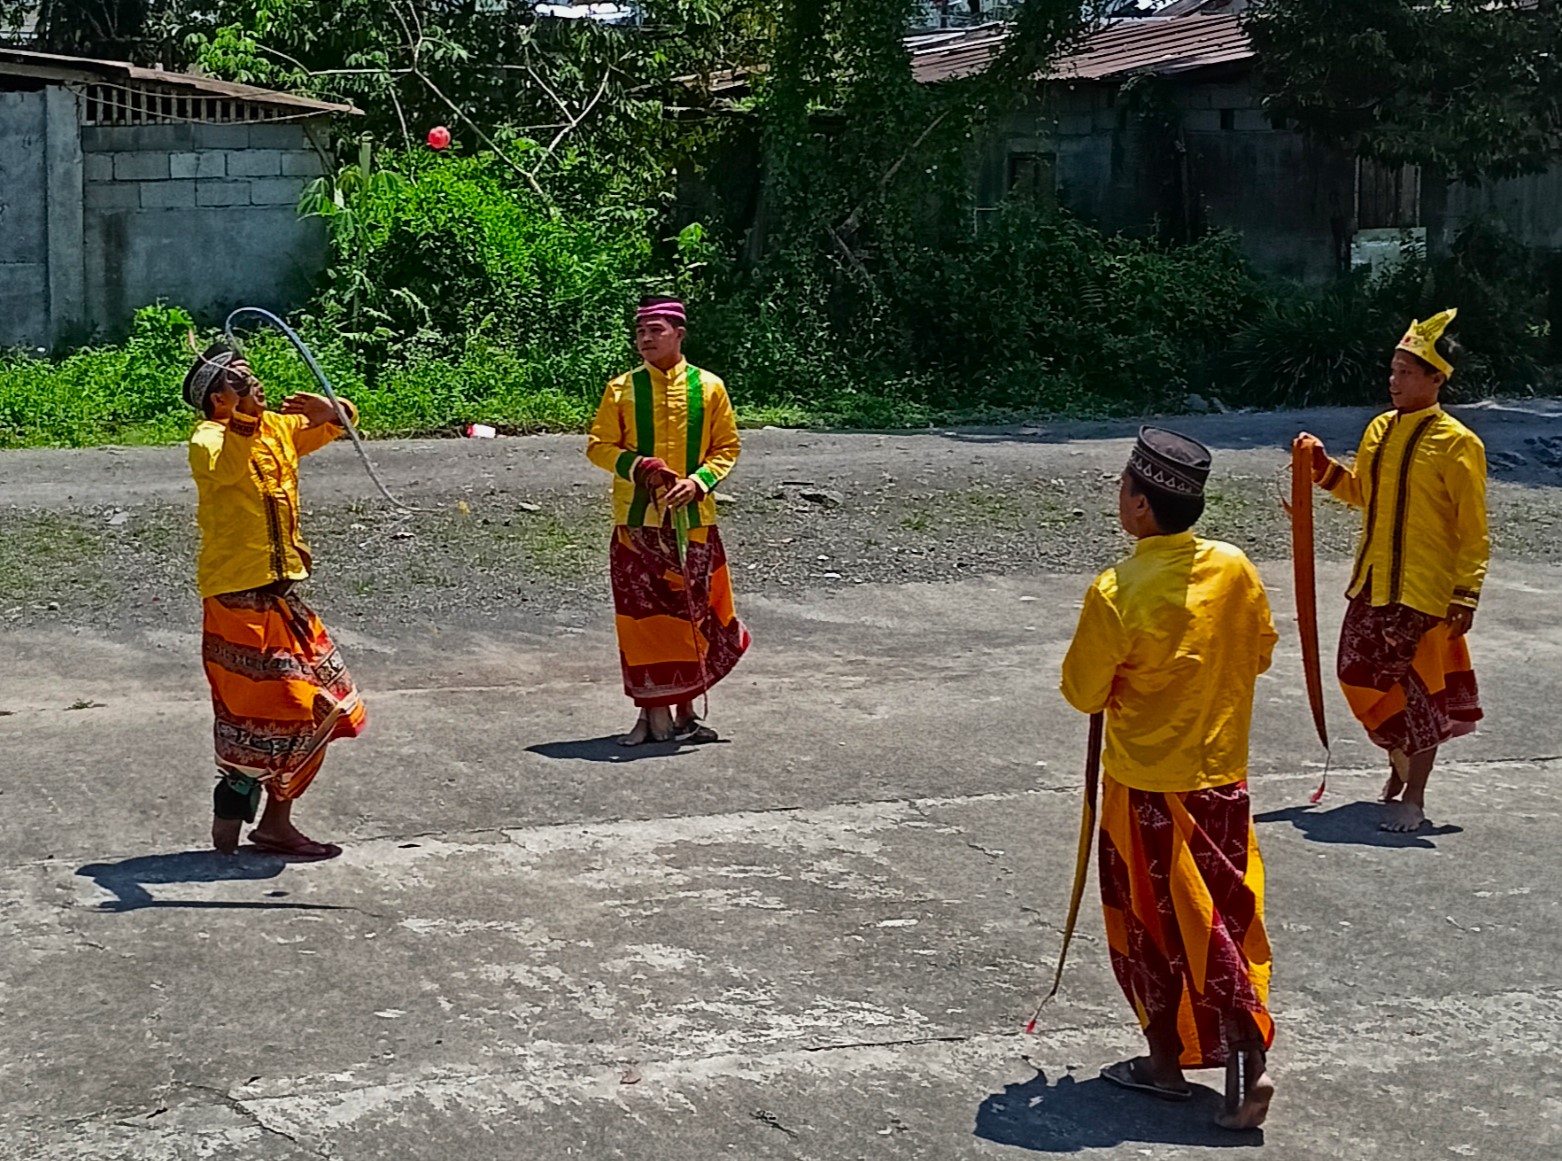 Sipa sa Lama: A Rhythmic Display of Maranao Culture